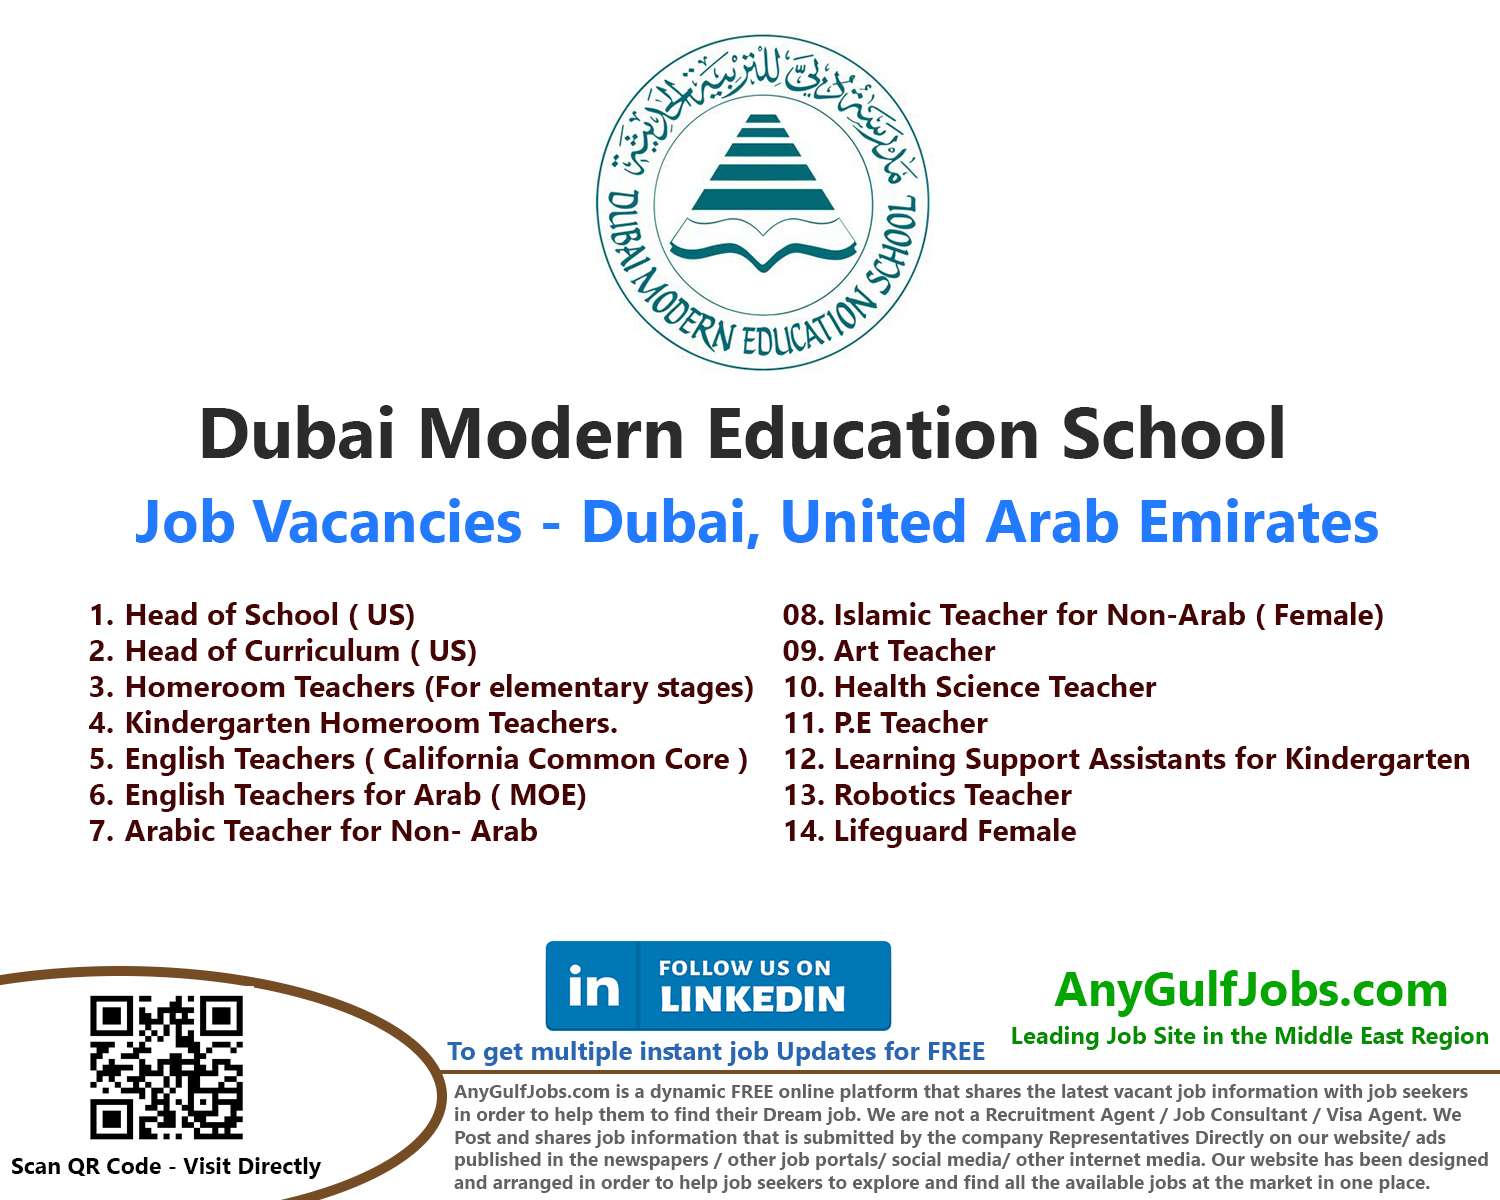 Dubai Modern Education School Job Vacancies - Dubai, United Arab Emirates